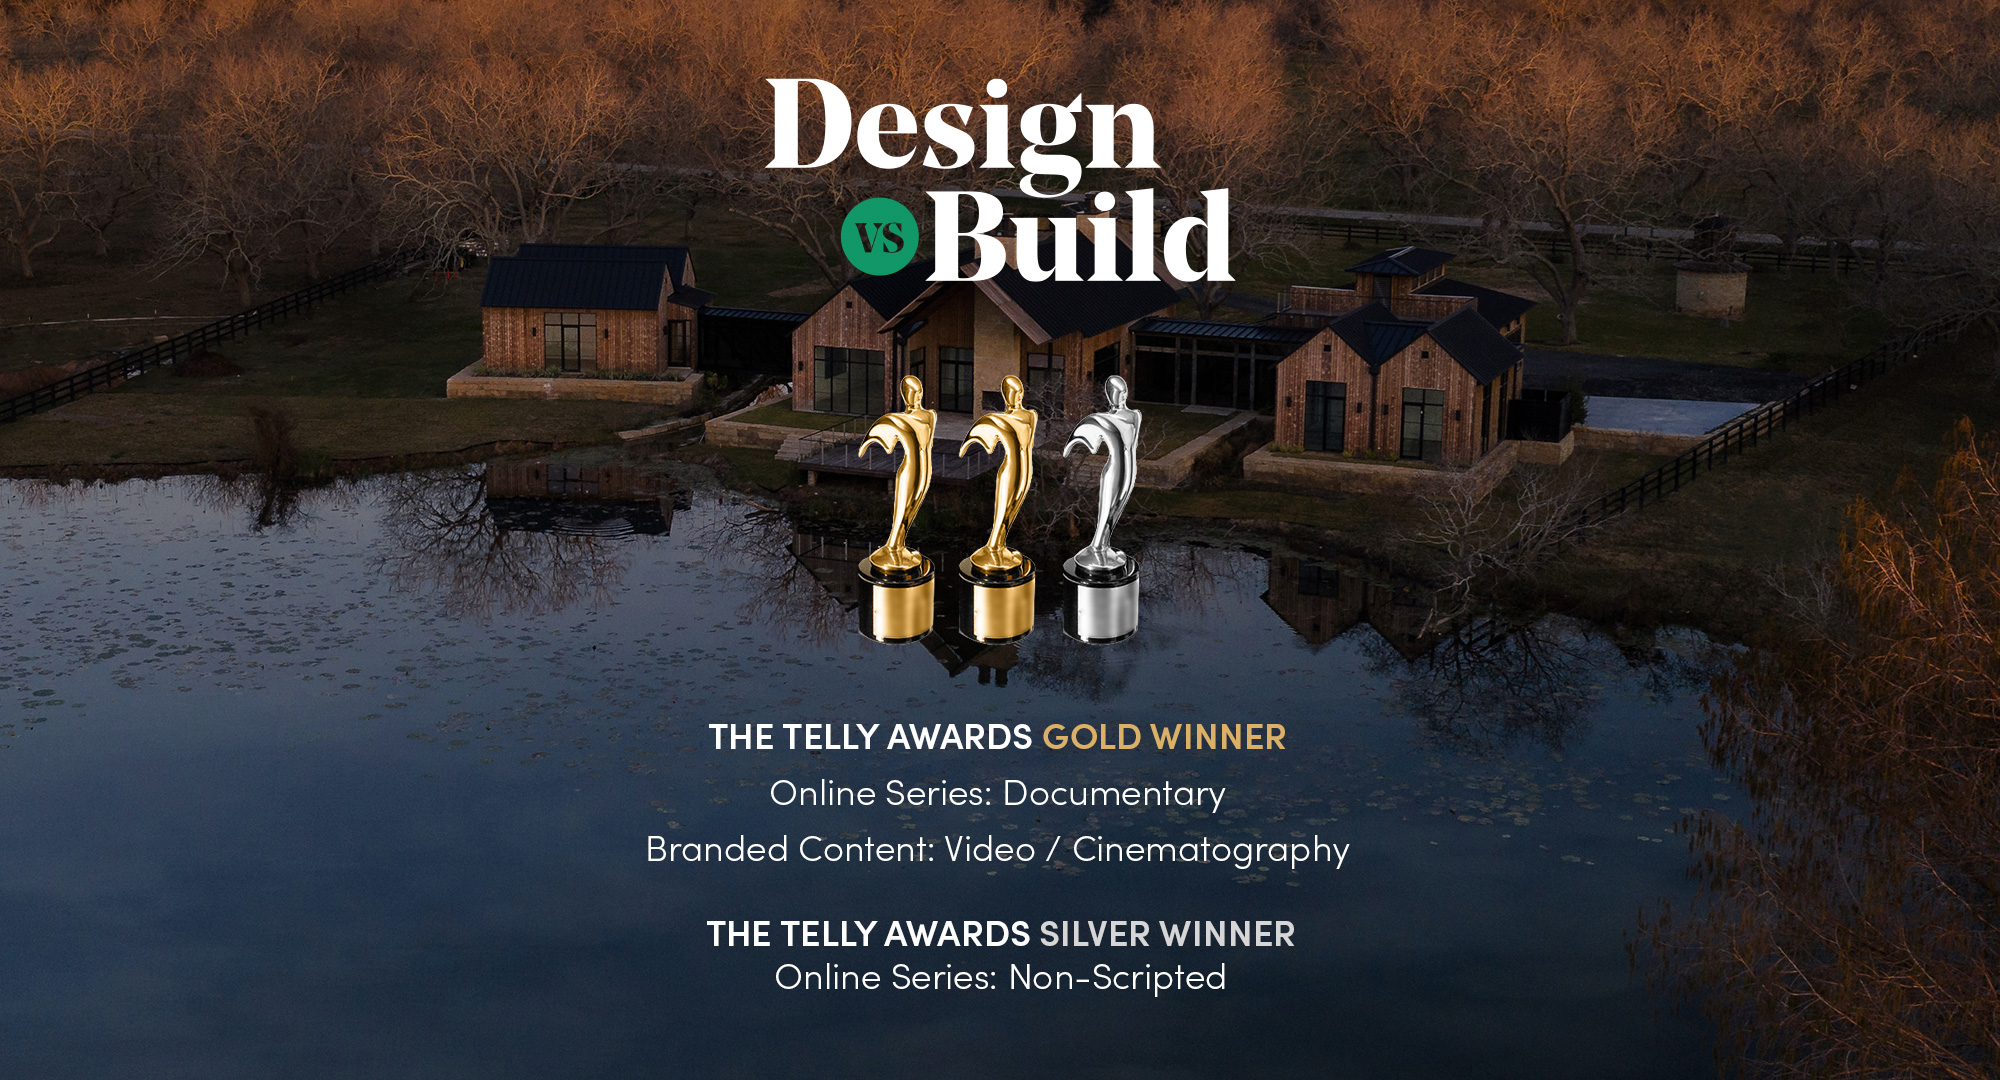 Design Vs Build Wins Three Telly Awards 